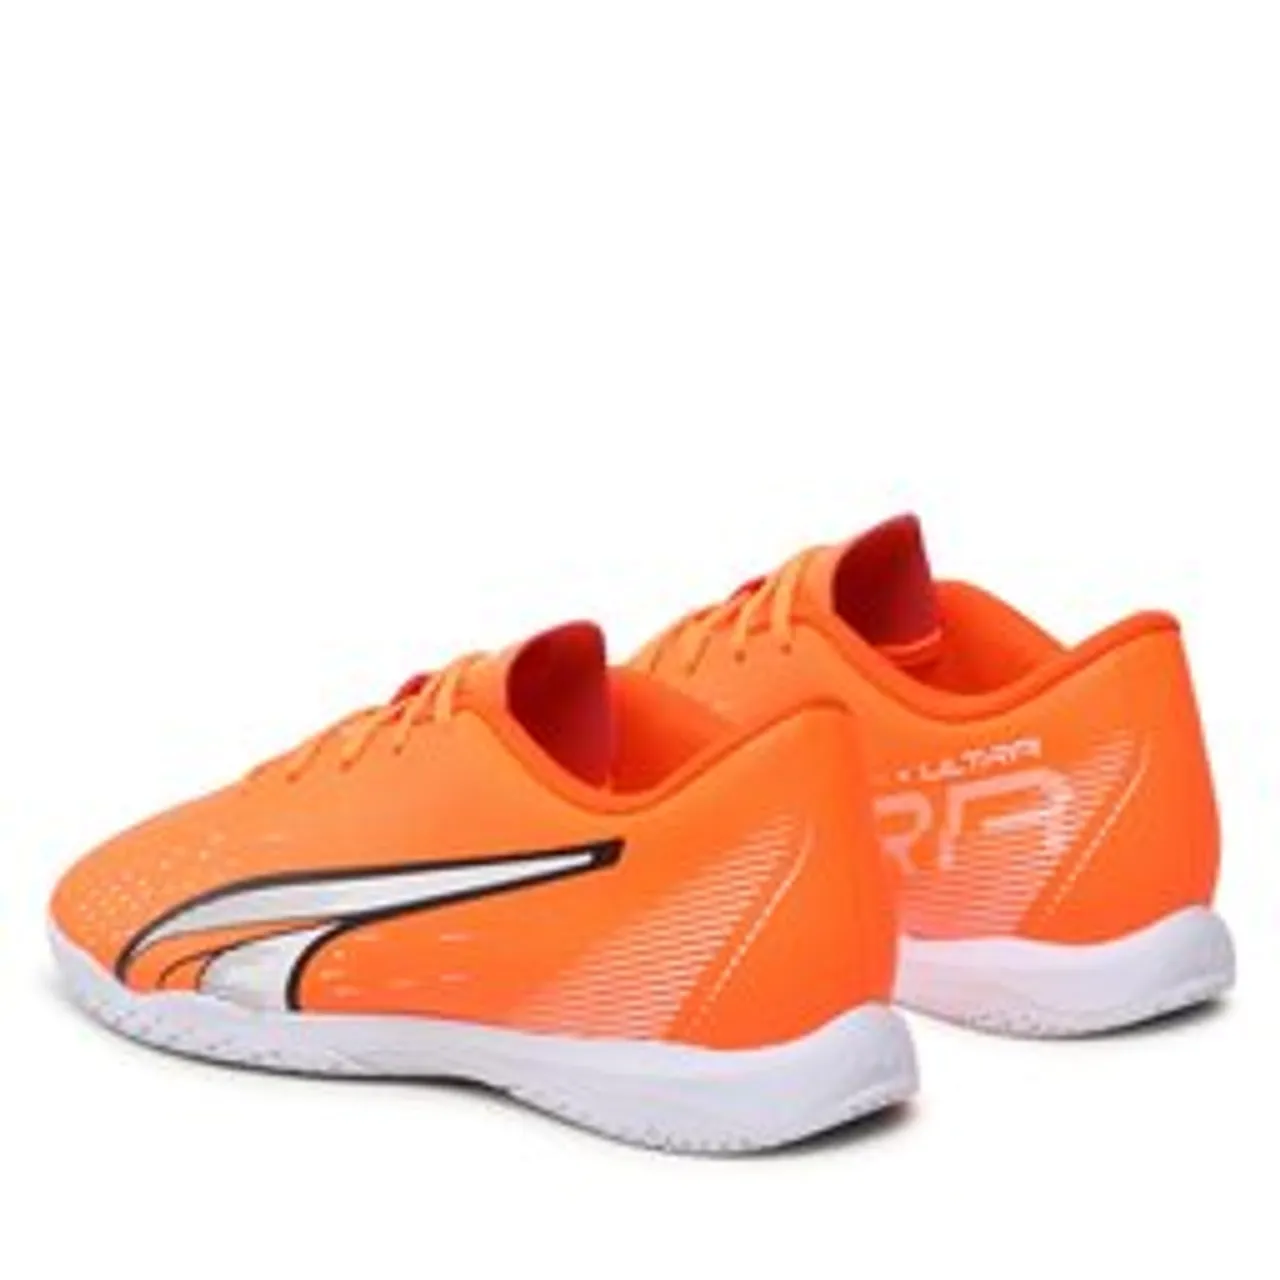 Schuhe Puma Ultra Play It Jr 107237 01 Orange/White/Blue